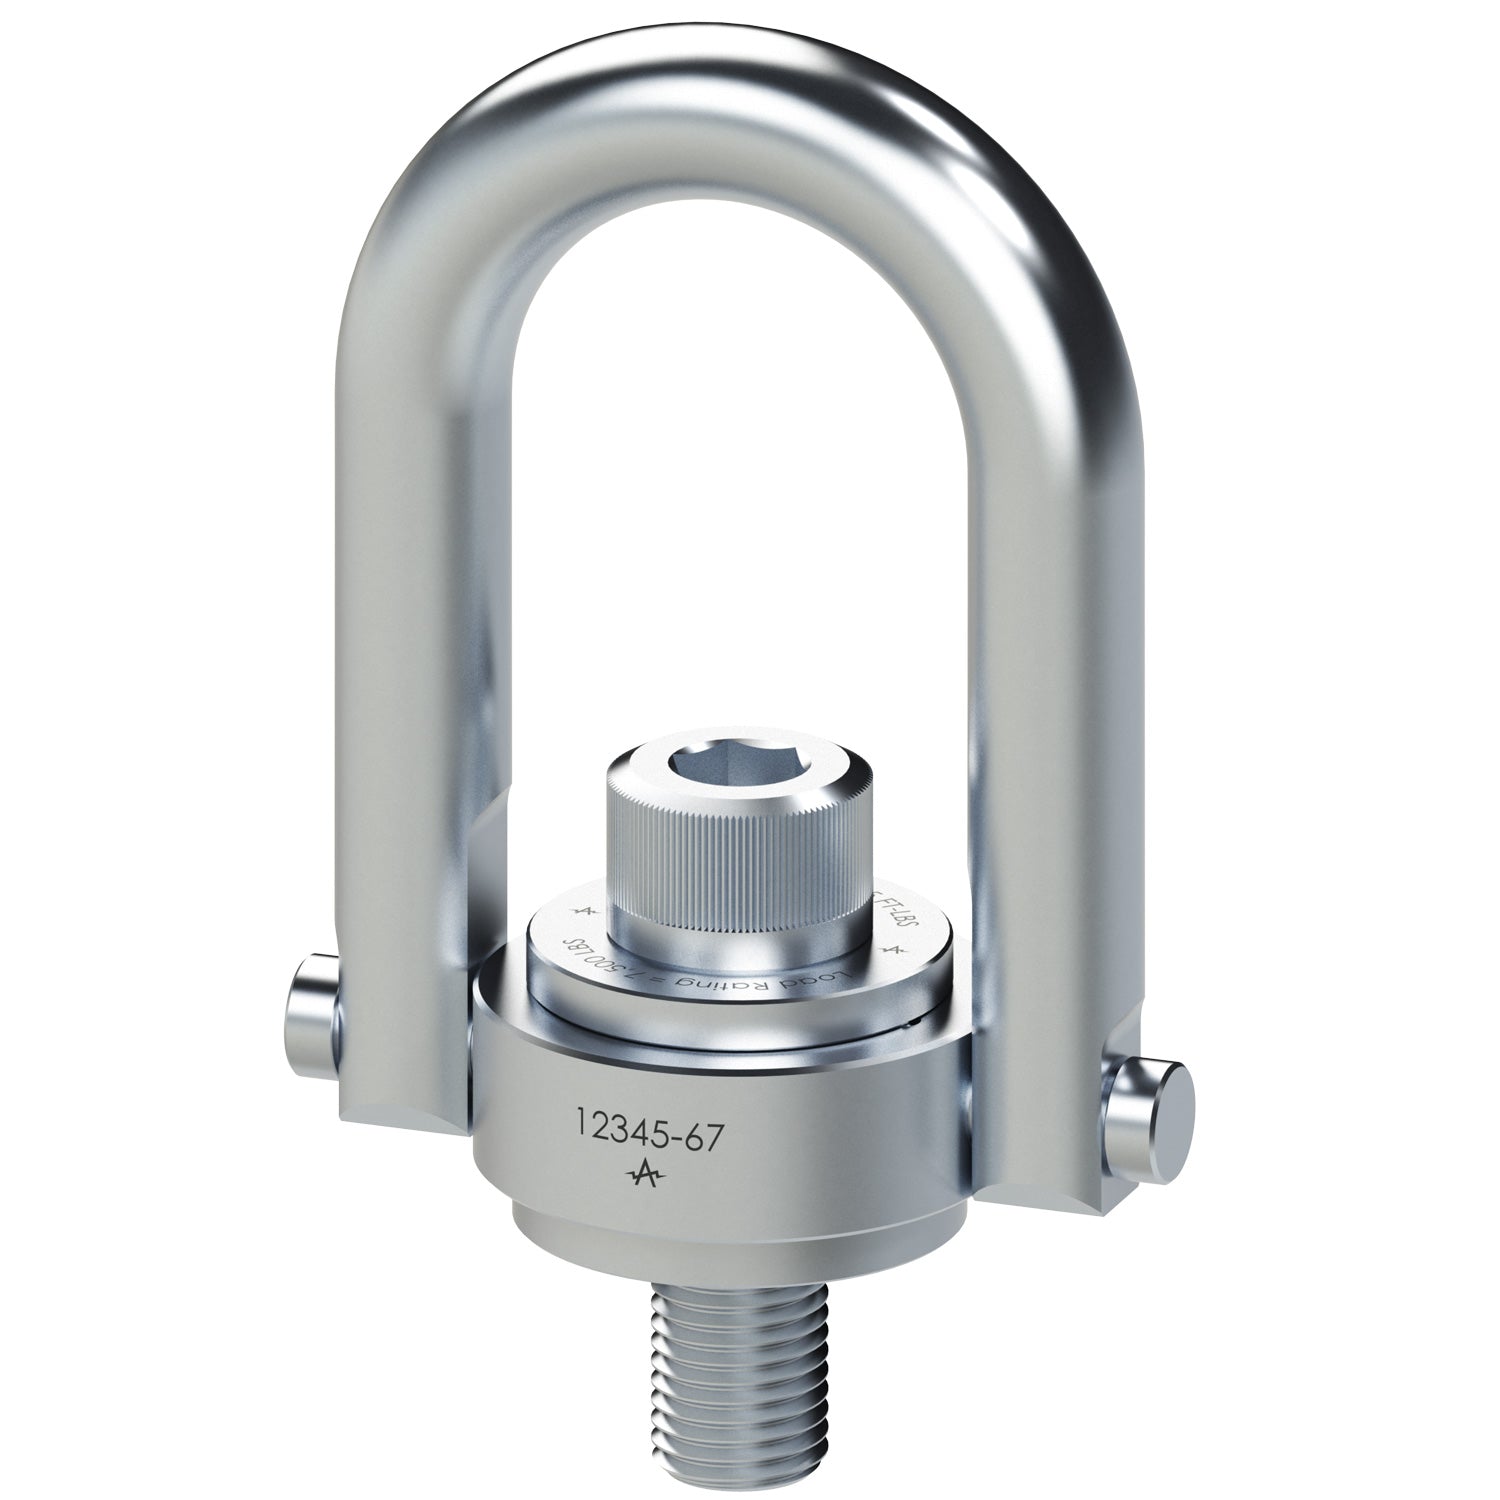 M30 x 54mm, 2250 kg WLL, Stainless Steel Safety Engineered ADB Hoist Ring